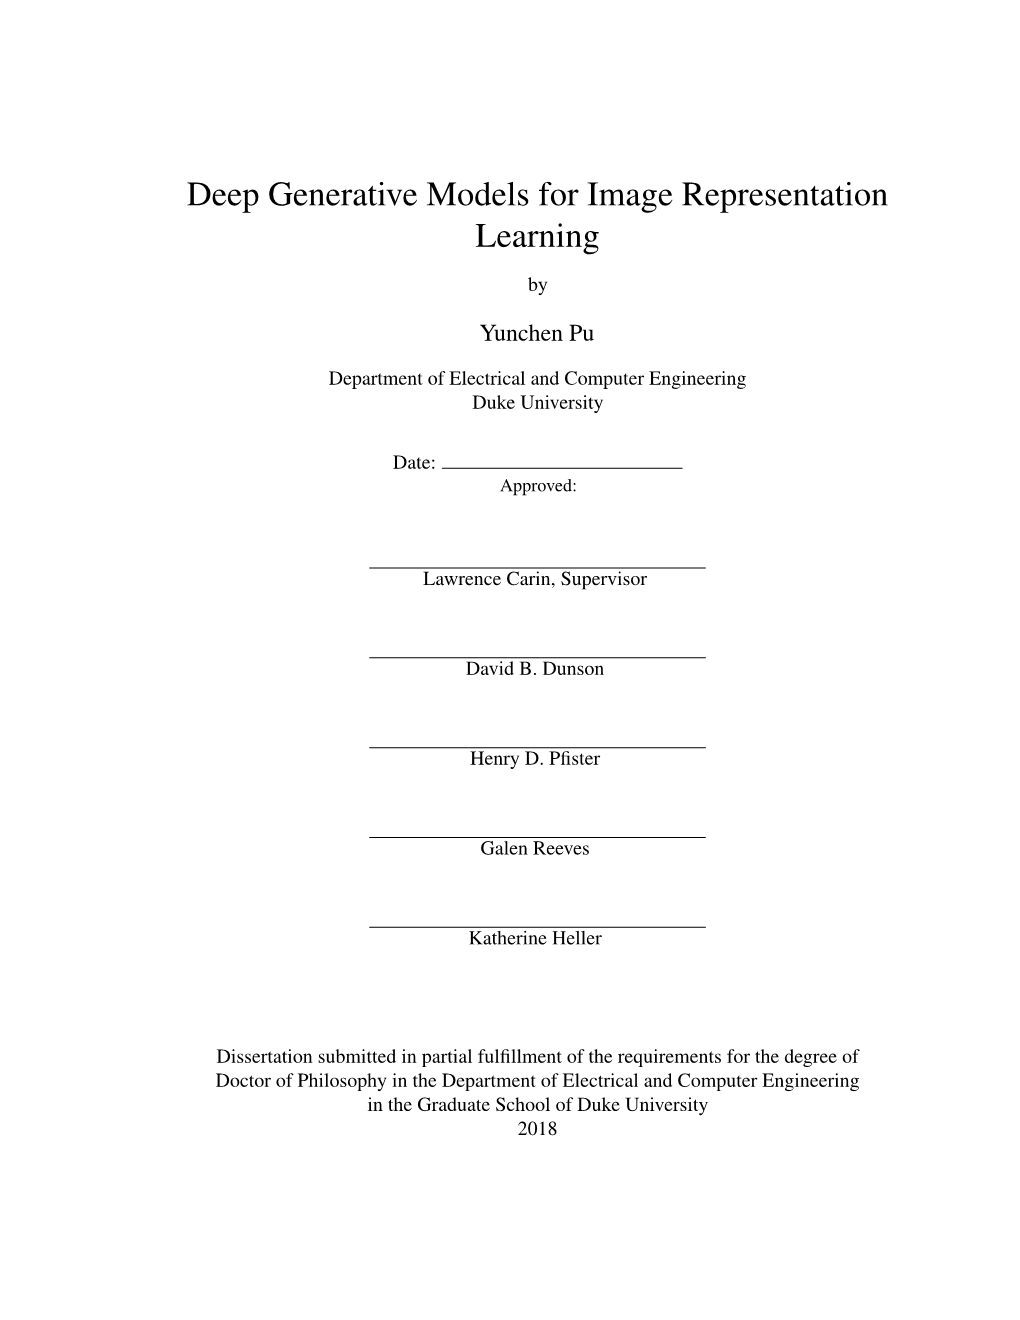 Deep Generative Models for Image Representation Learning